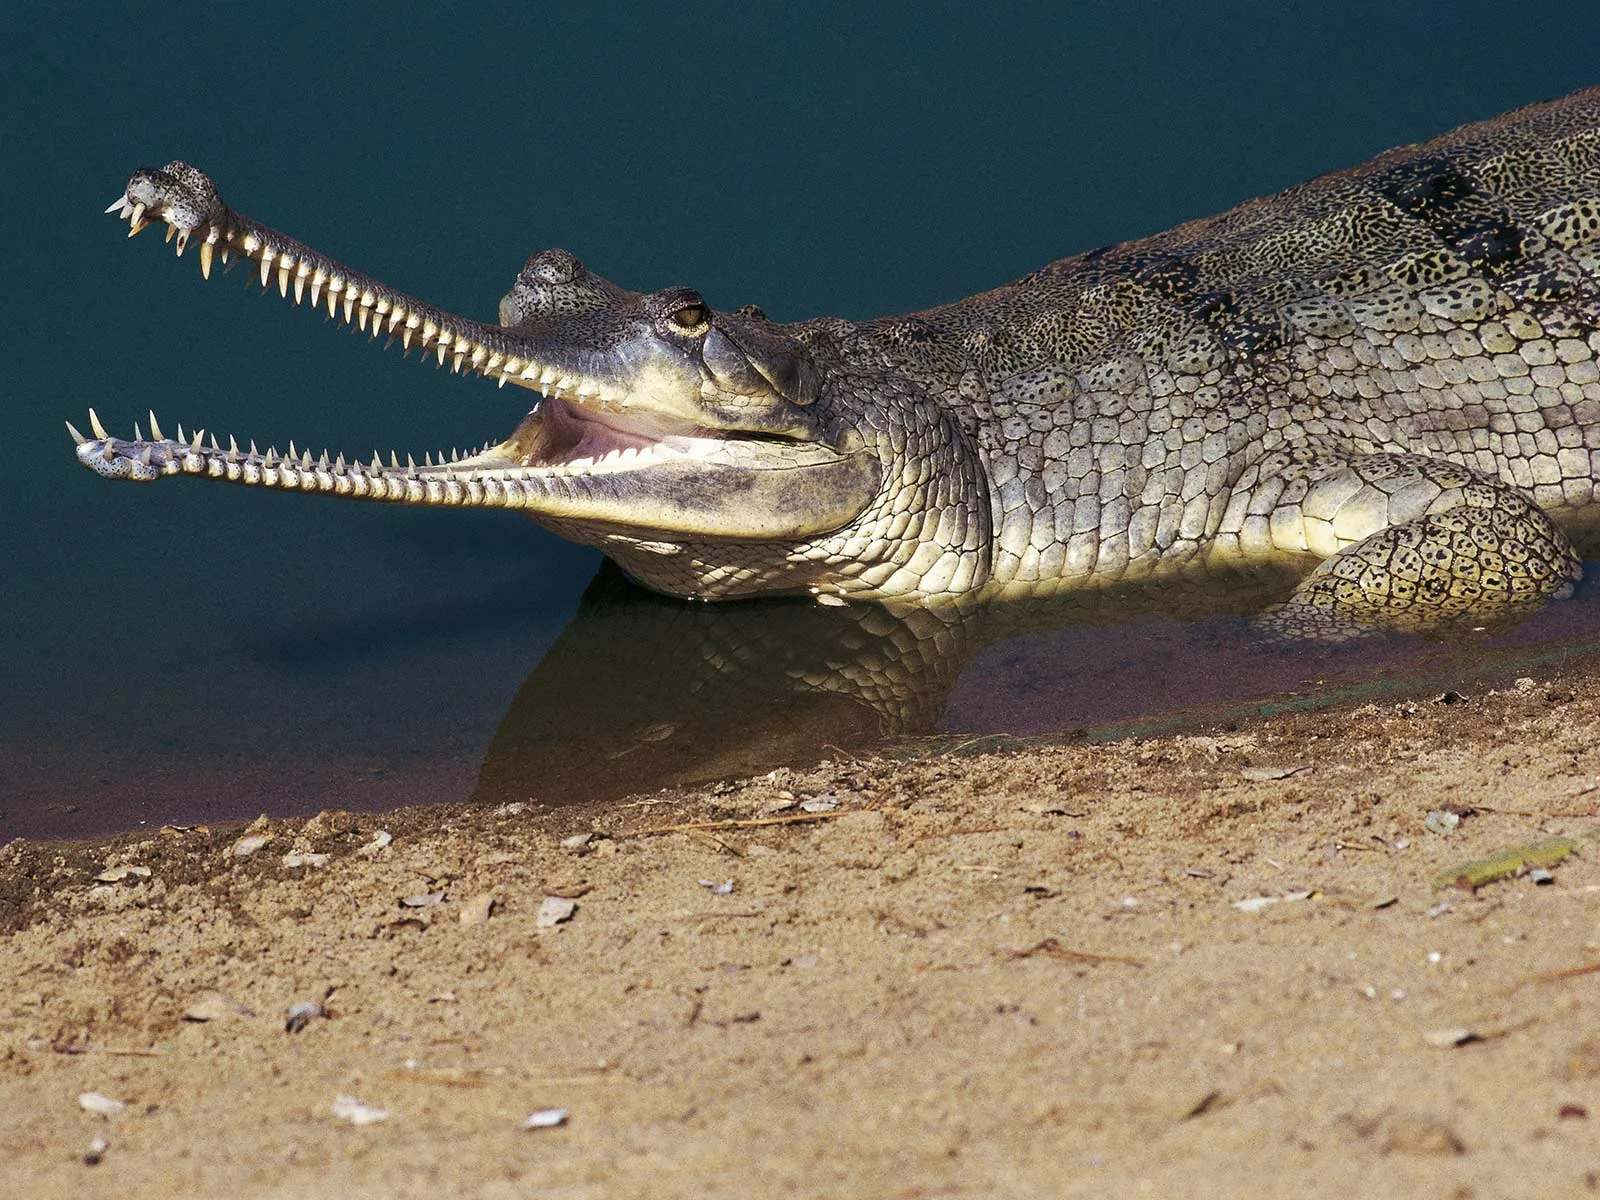 crocodiles vs alligators size